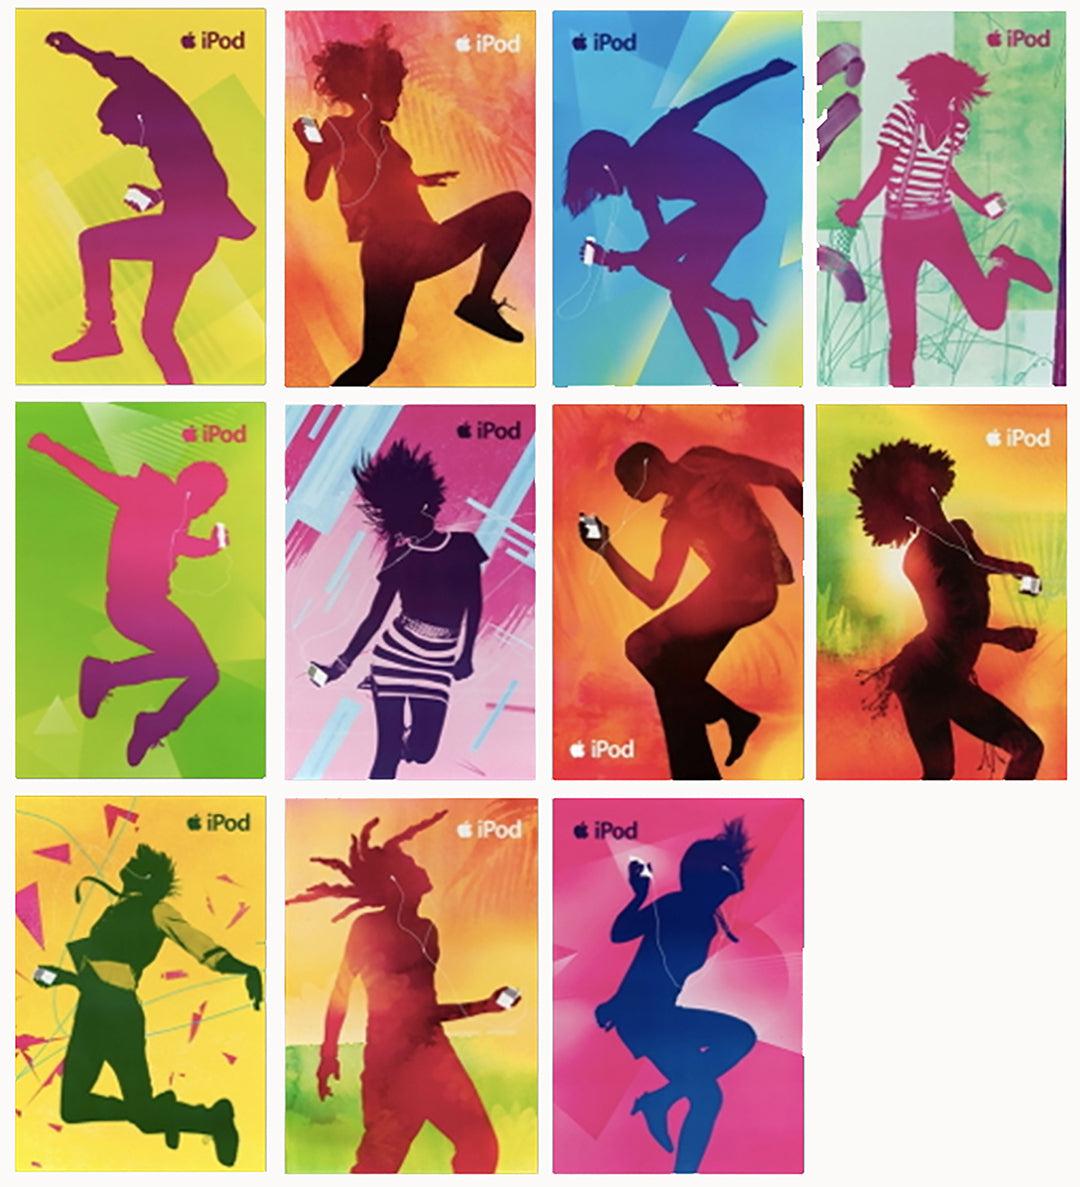 Original Set of 11 Apple iPod Posters 2007 - Great Graphics